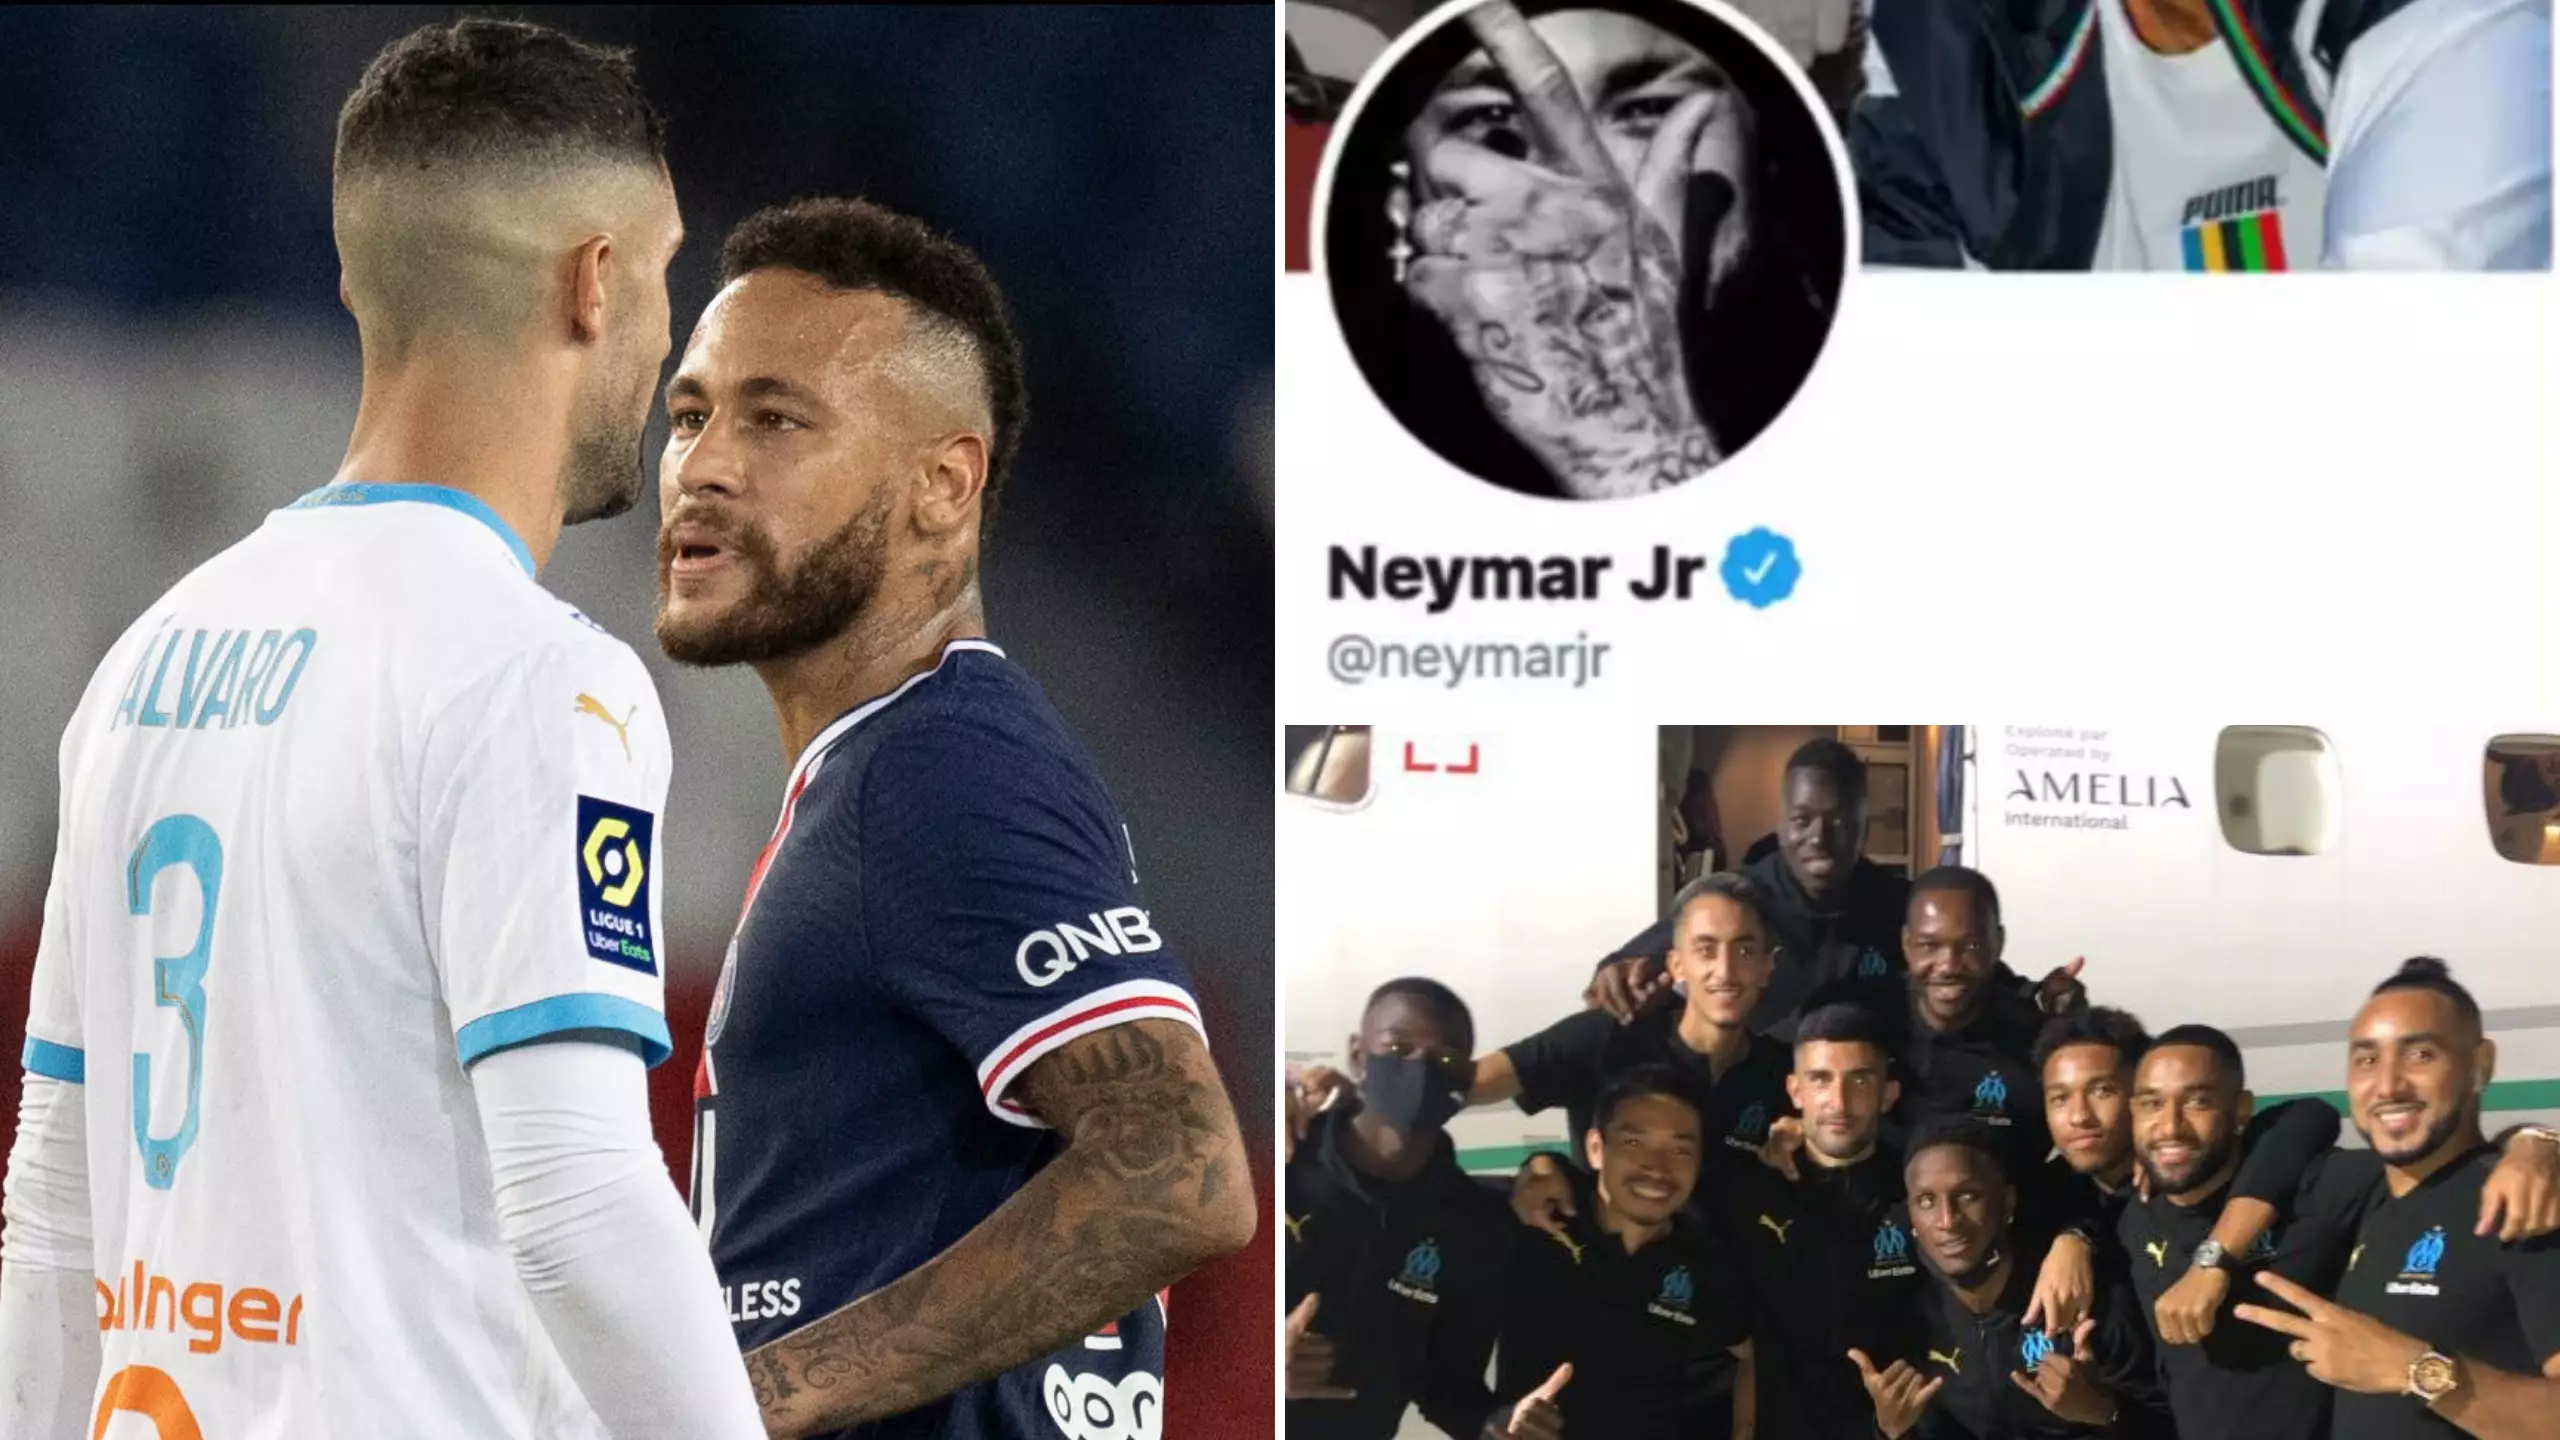 Neymar Responds To Alvaro Gonzalez's 'Bad Loser' Jibe With Further Racism Claims